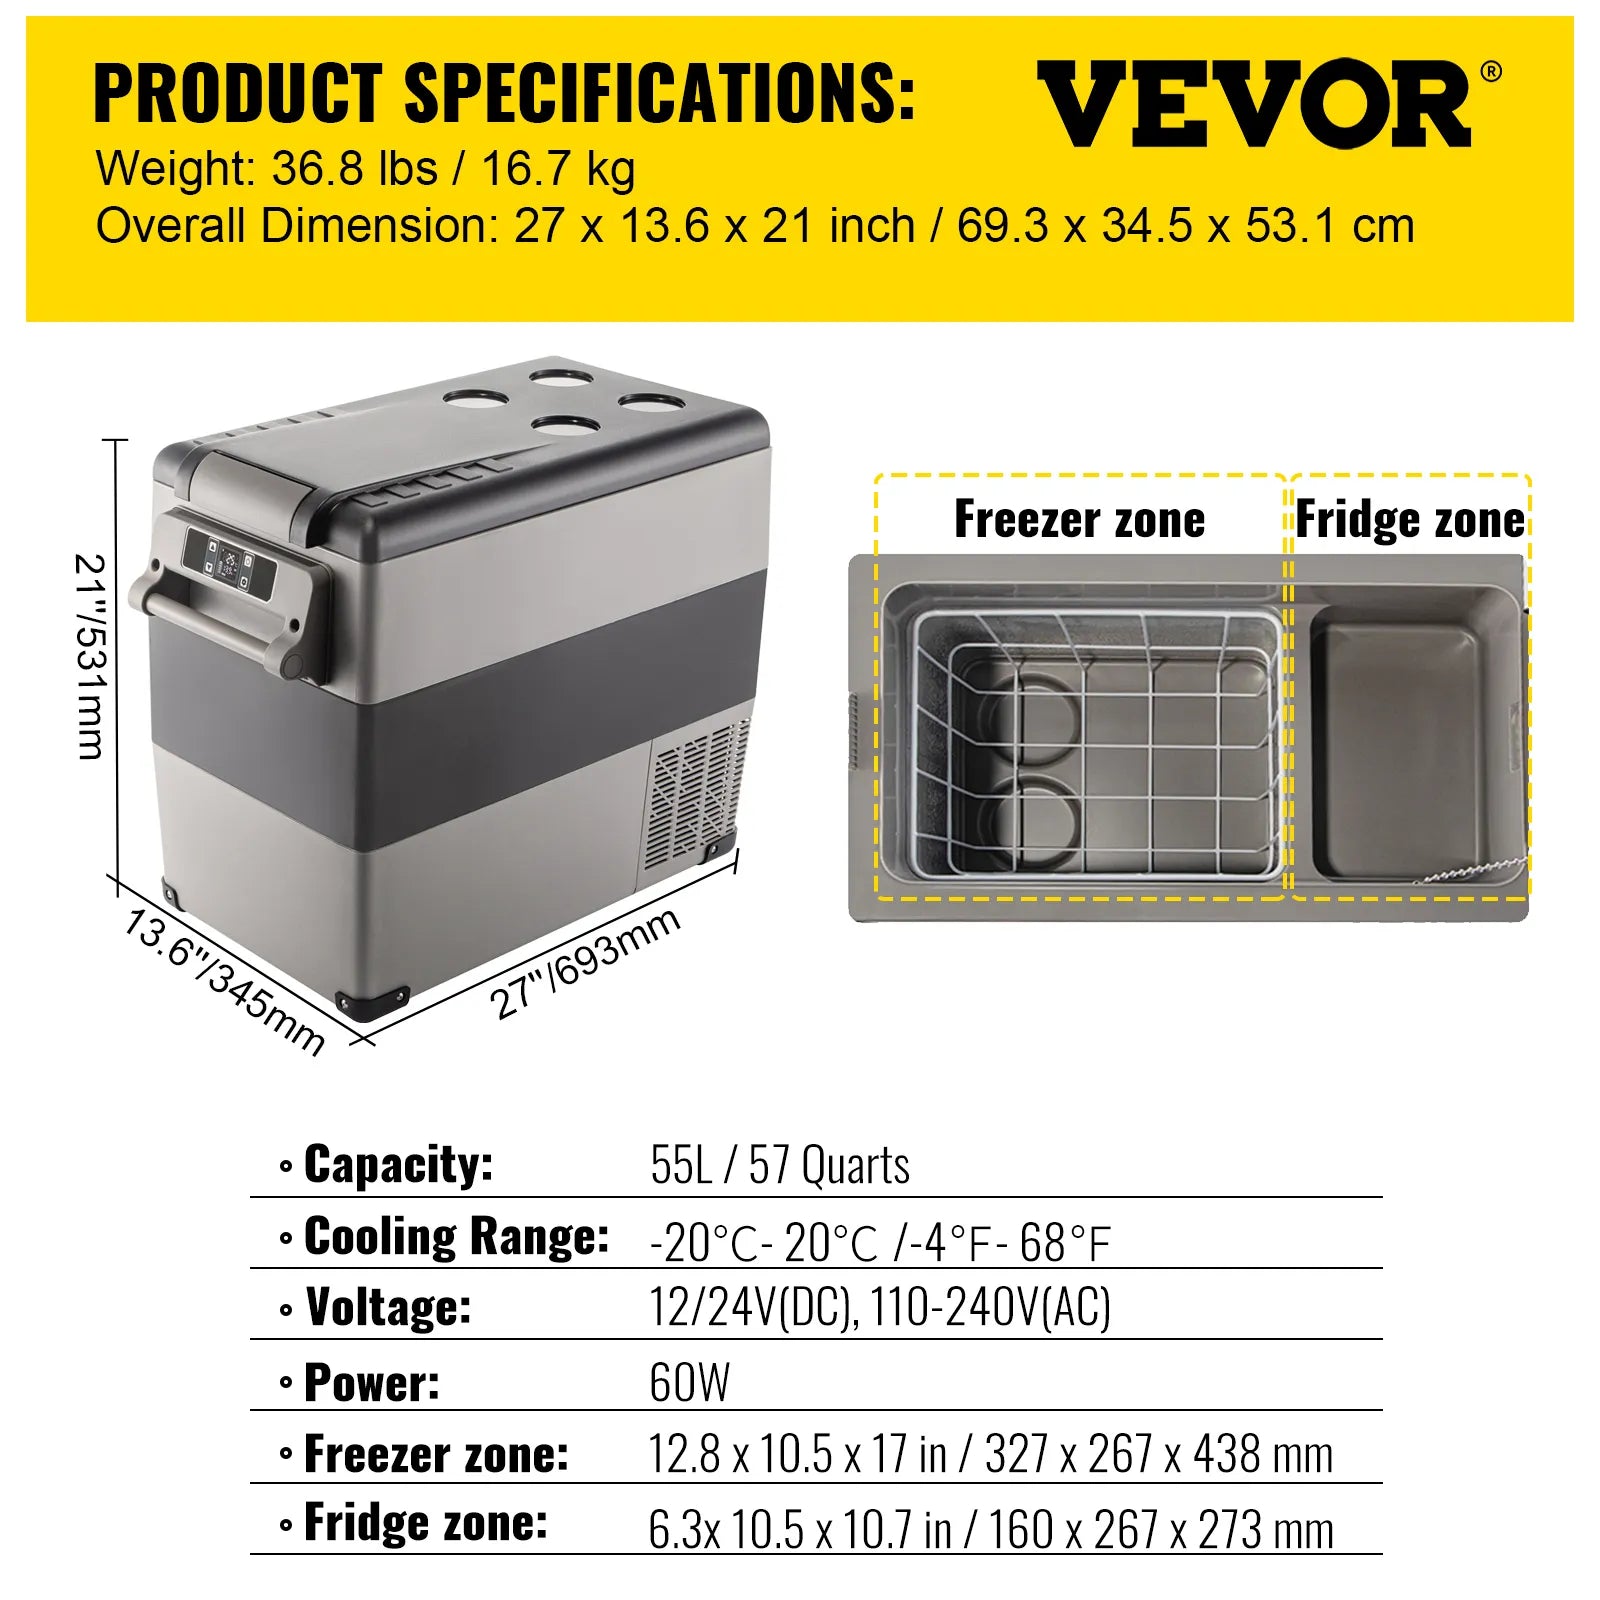 Car Refrigerator Mini Fridge Freezer - Your Ultimate Portable Cooling Companion!